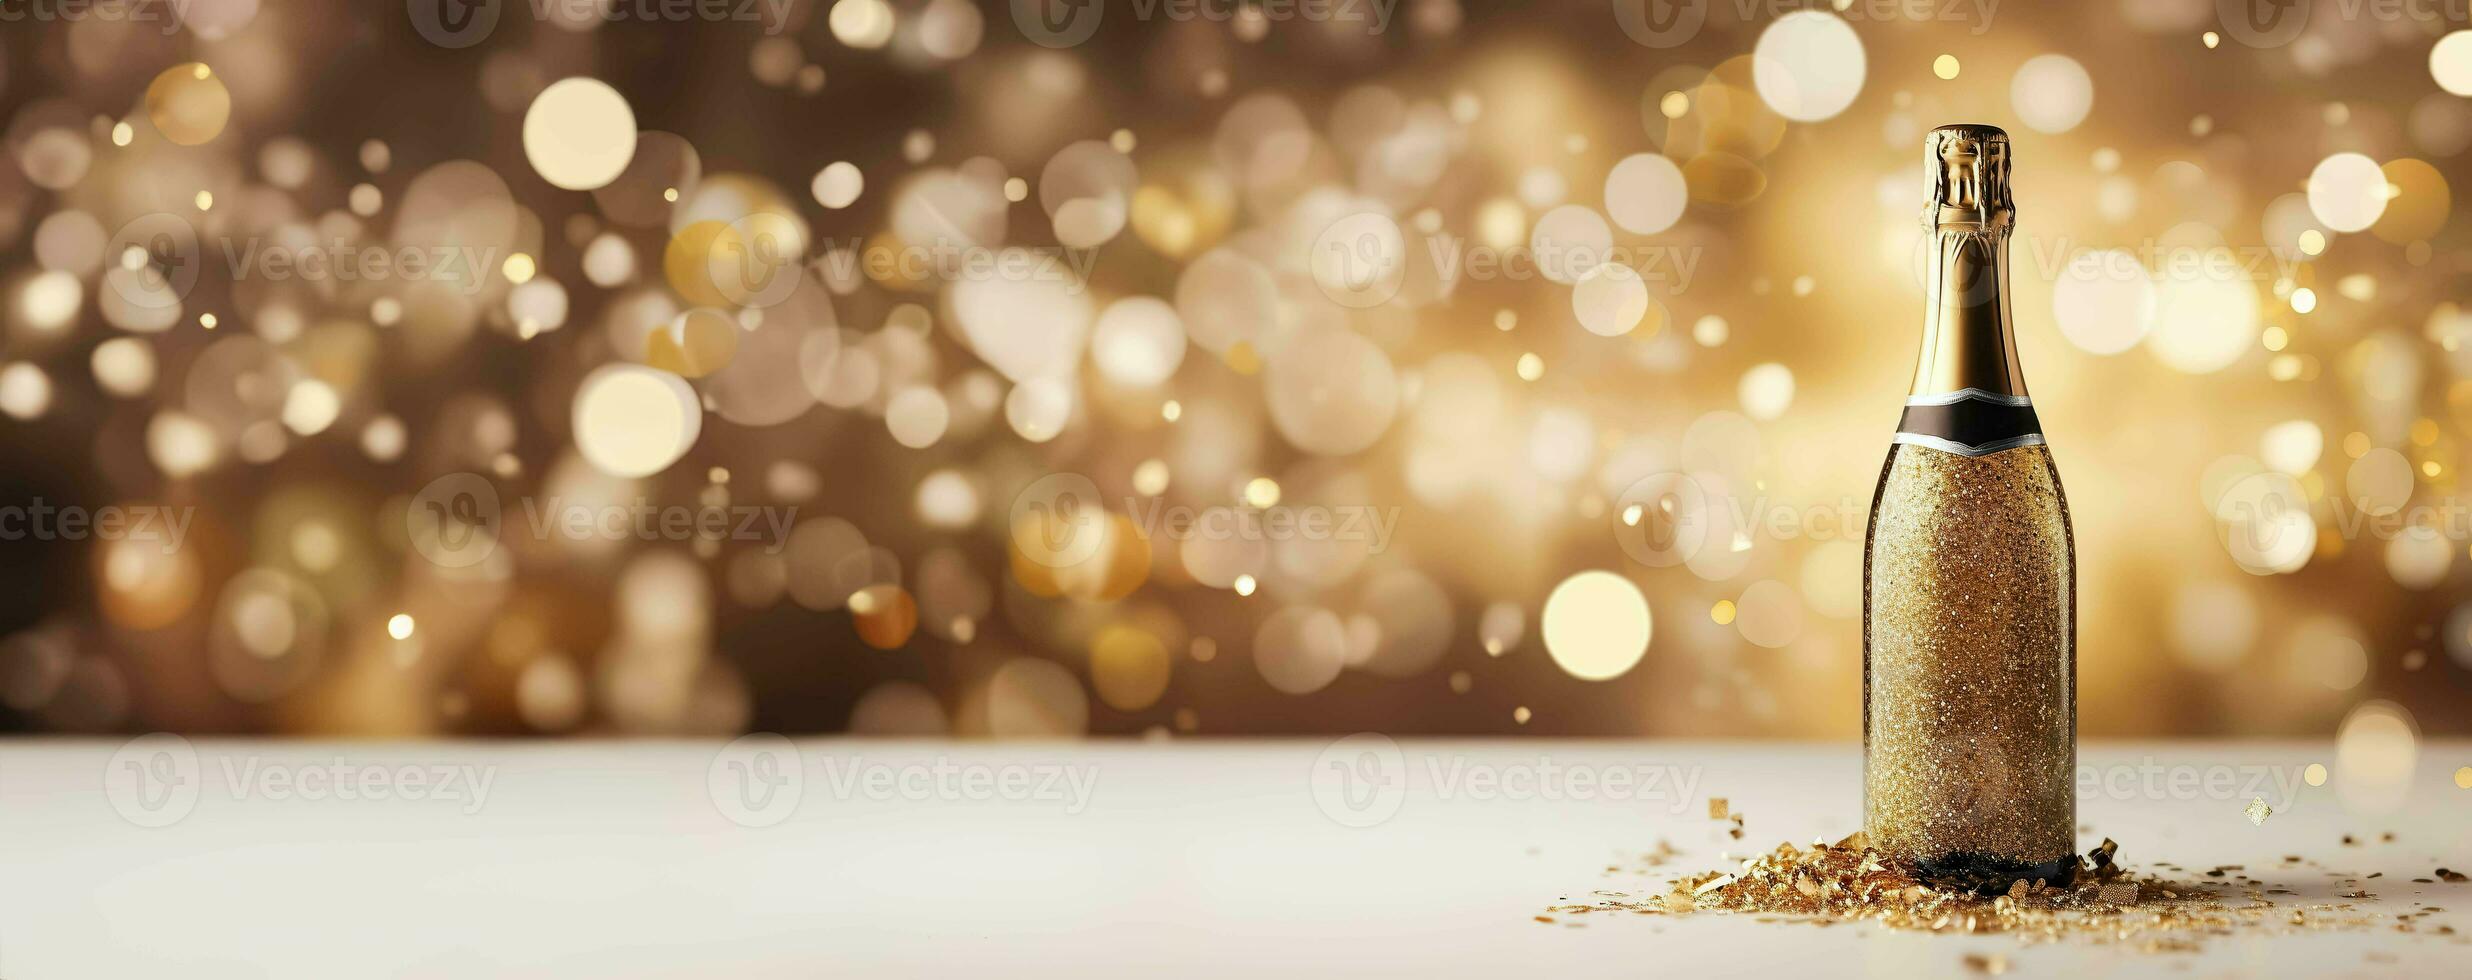 viering achtergrond met gouden Champagne fles confetti sterren en partij slingers foto